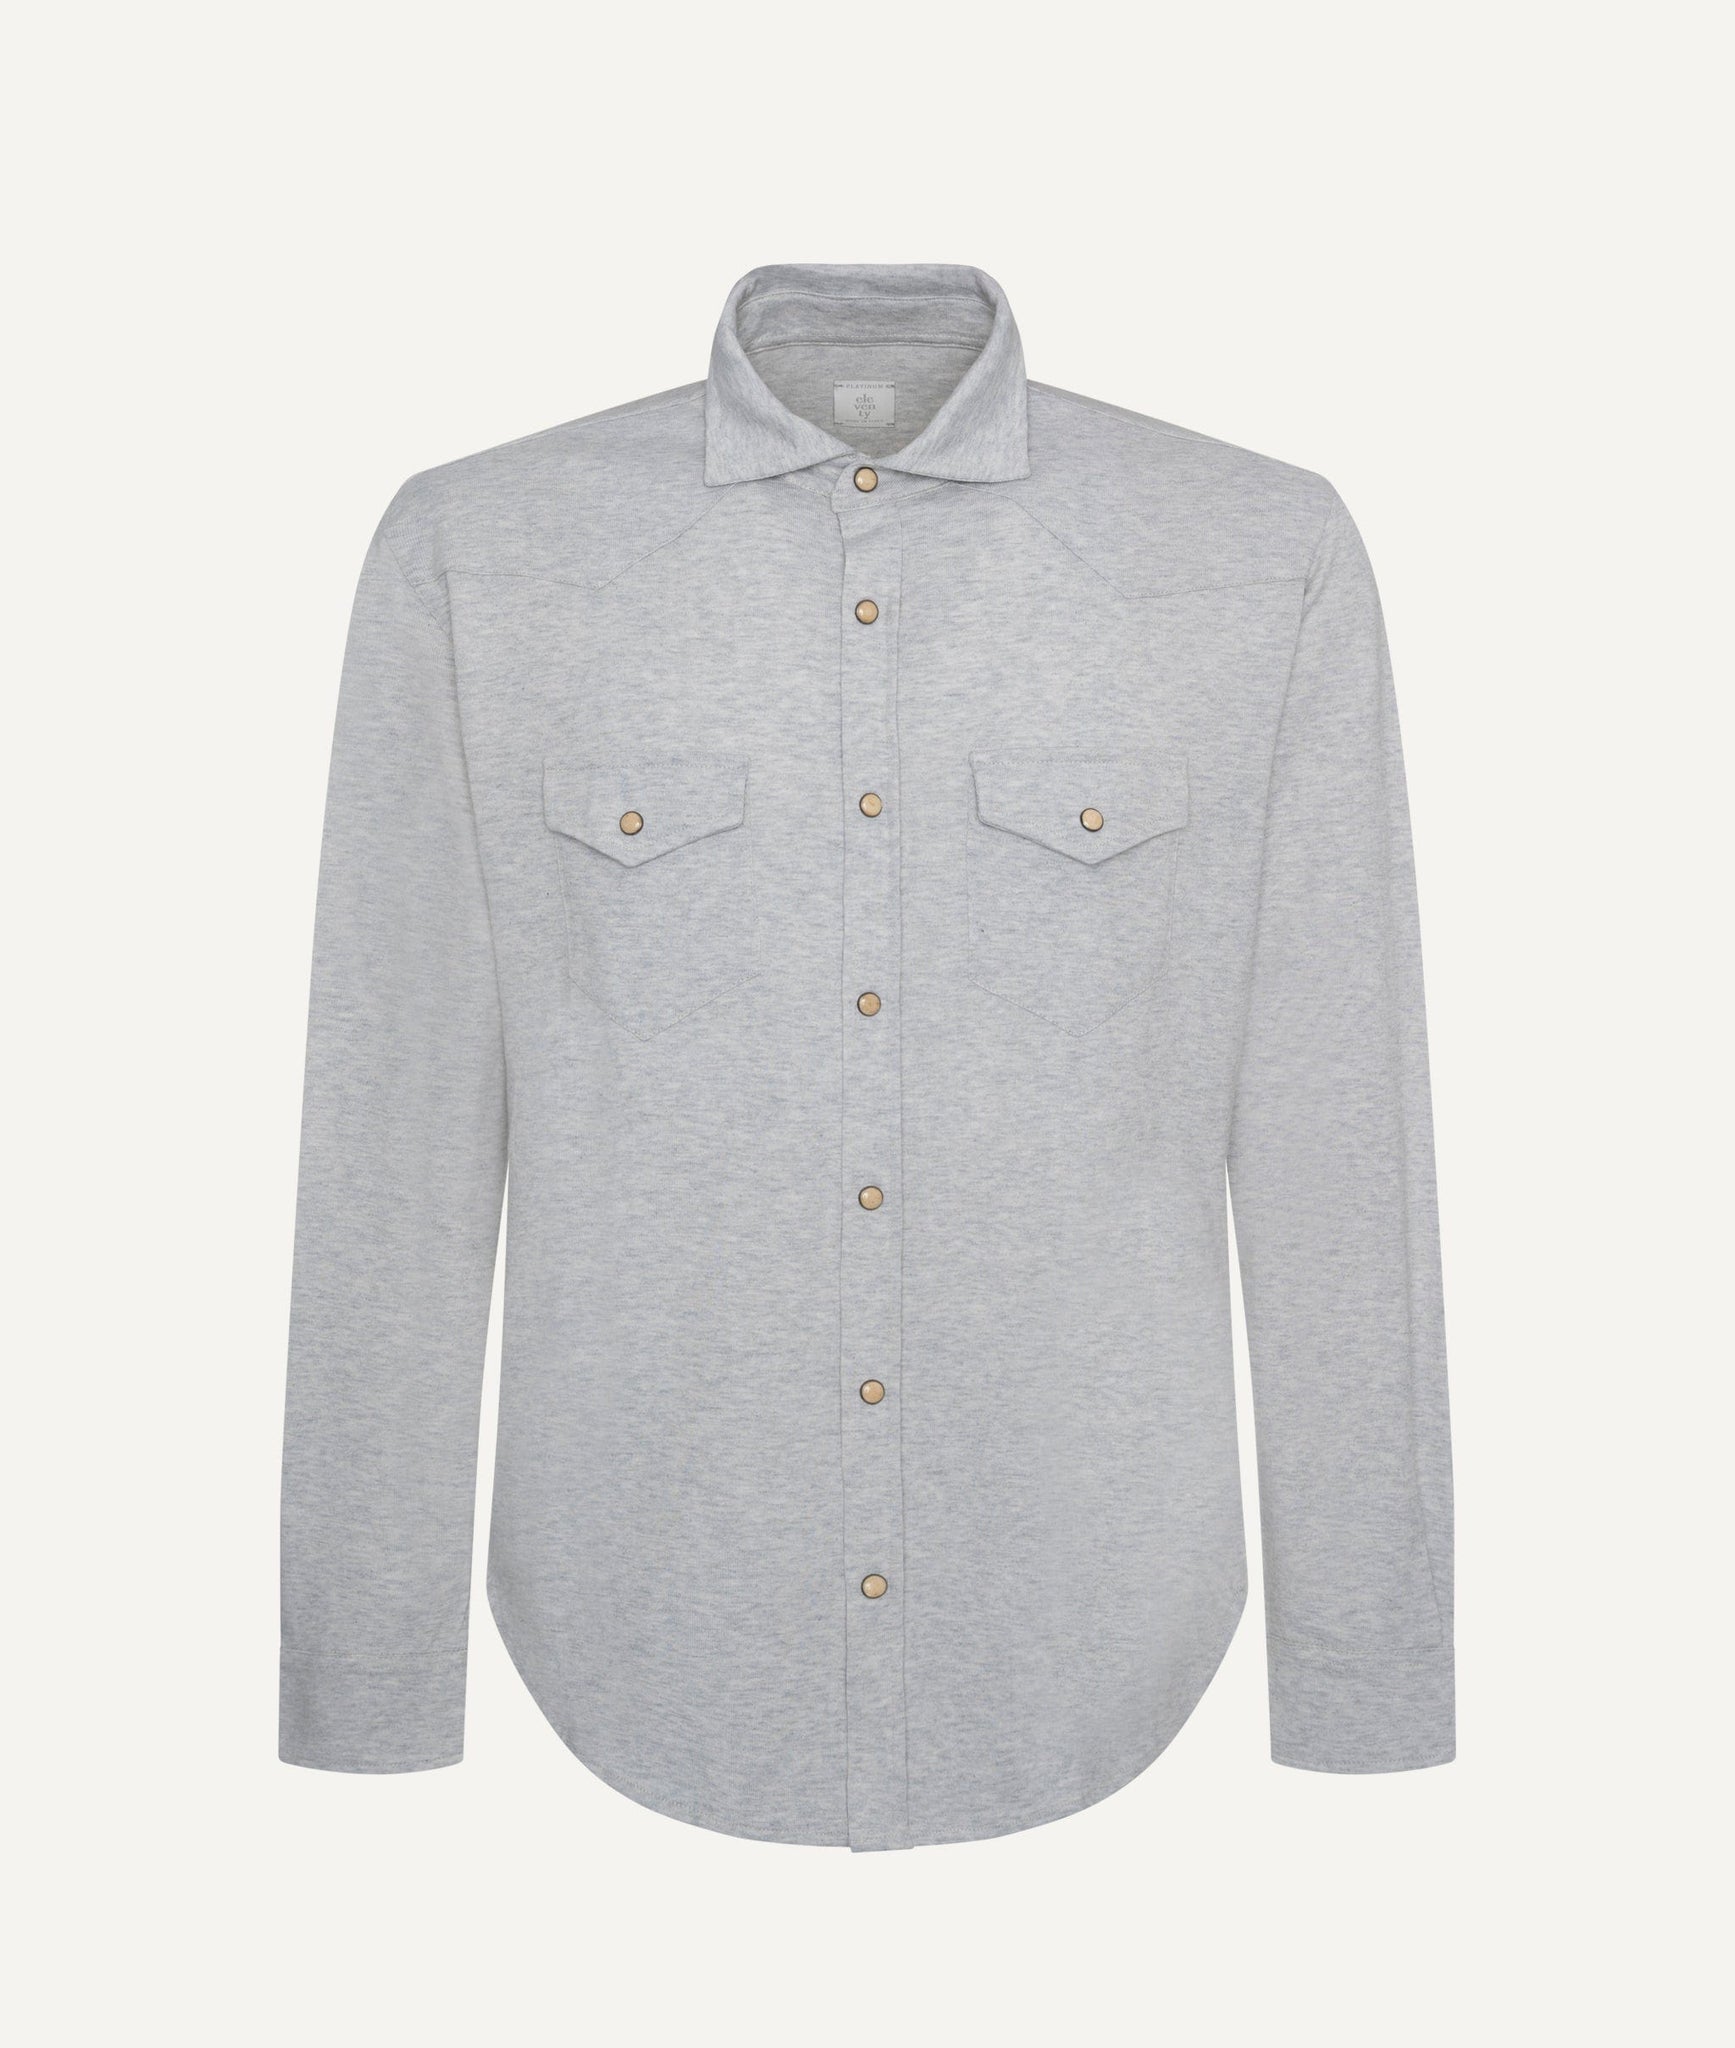 Eleventy - Shirt in Cotton